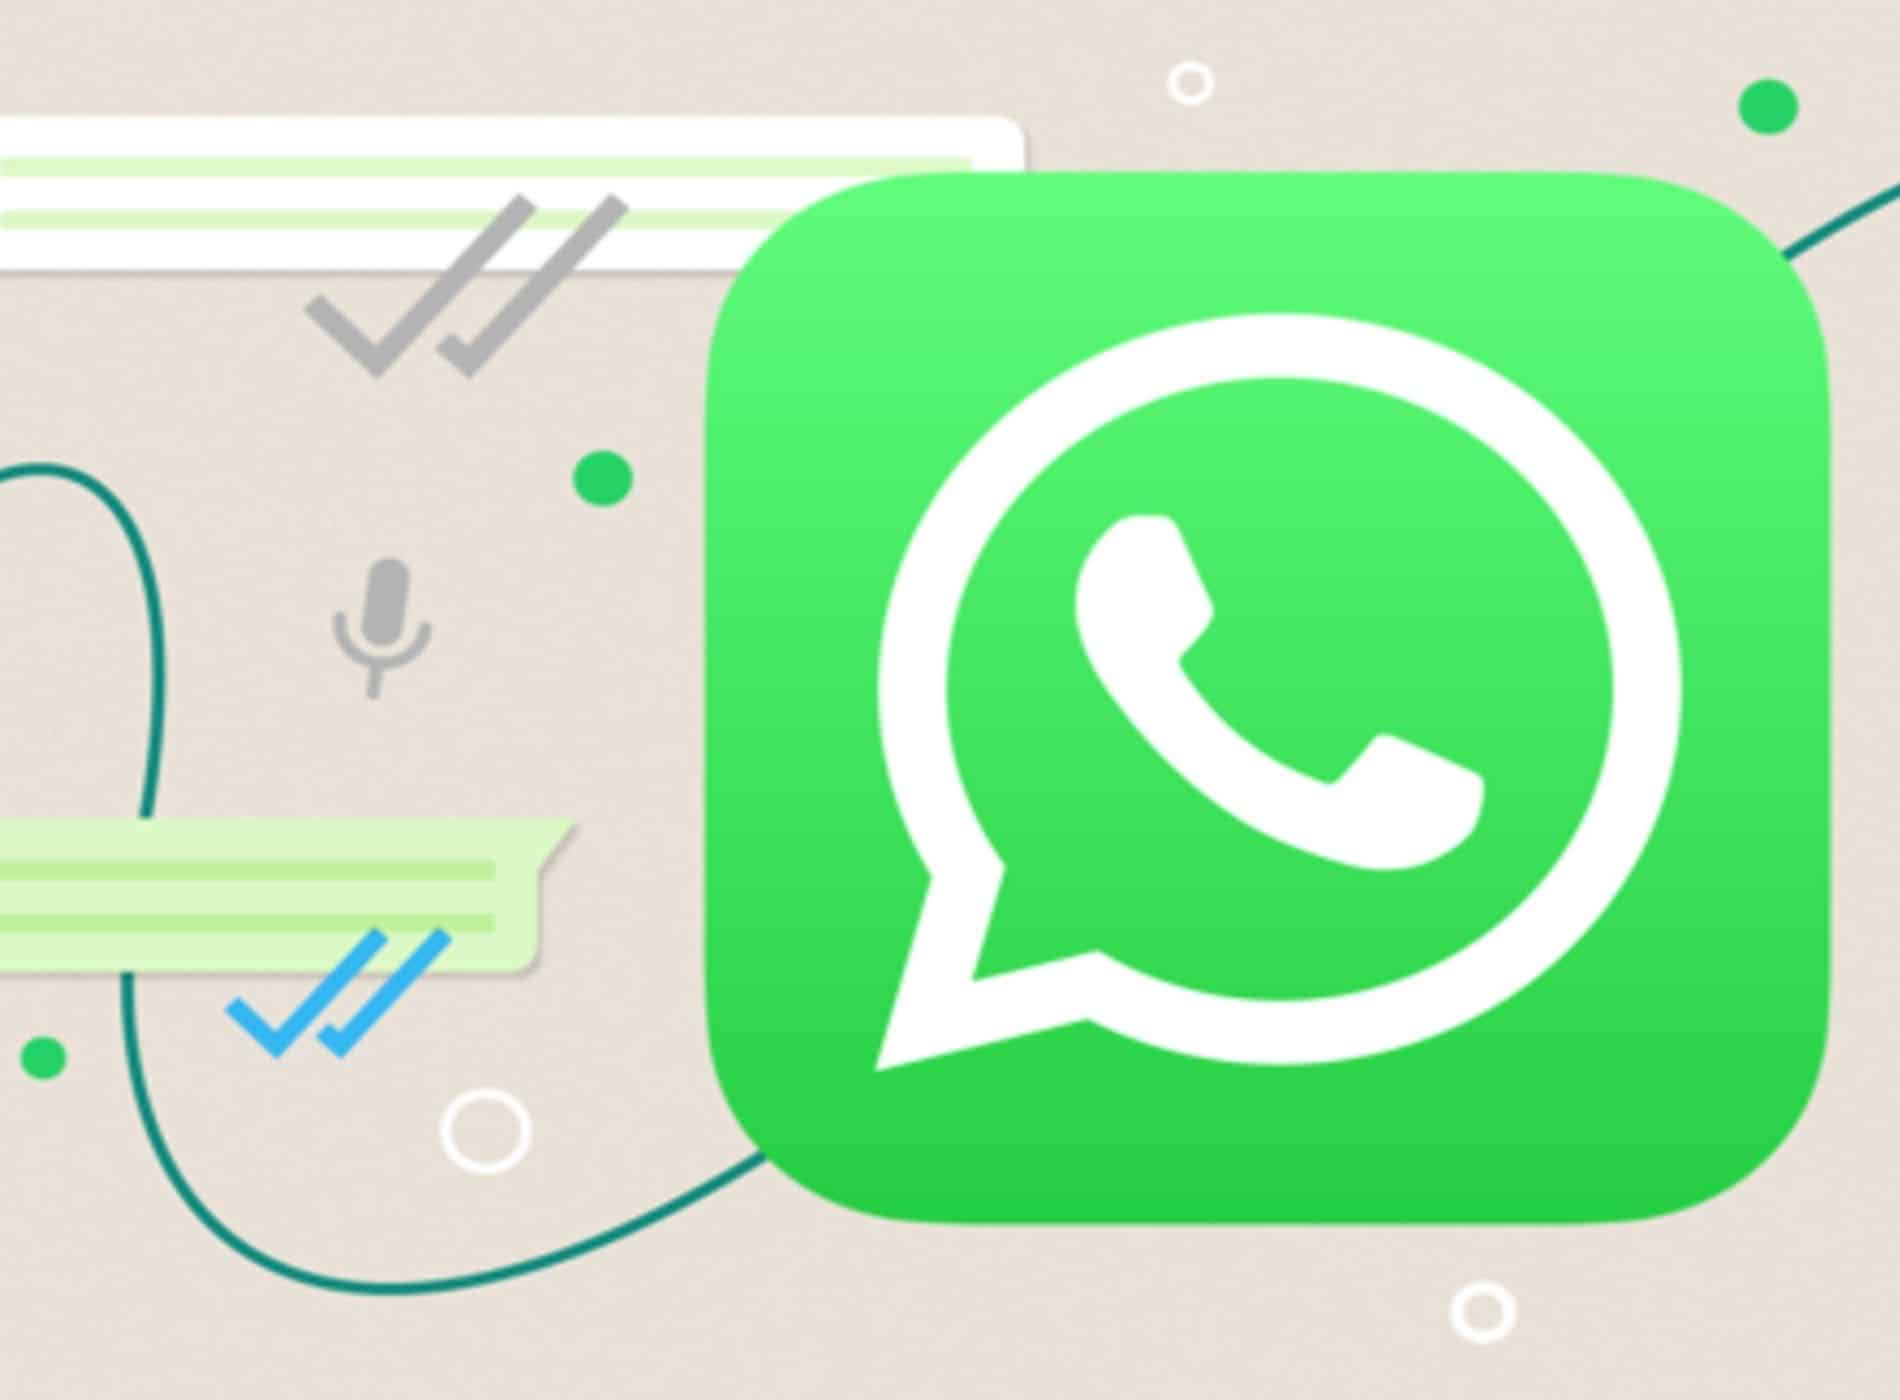 Tutorial paso a paso para recuperar un chat reportado en WhatsApp